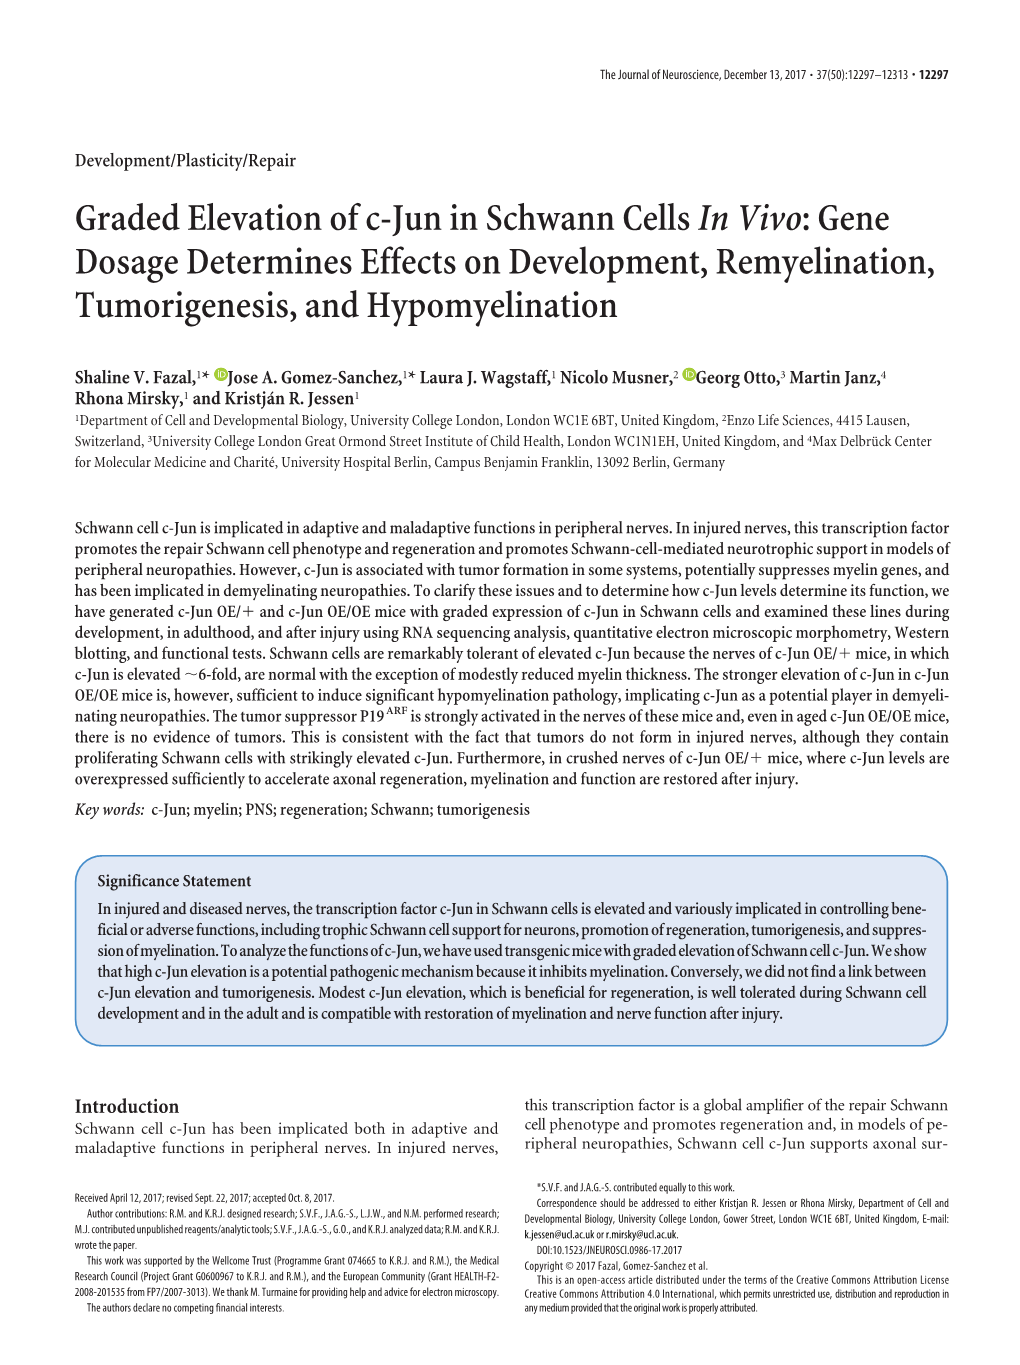 Graded Elevation of C-Jun in Schwann Cells in Vivo: Gene Dosage Determines Effects on Development, Remyelination, Tumorigenesis, and Hypomyelination